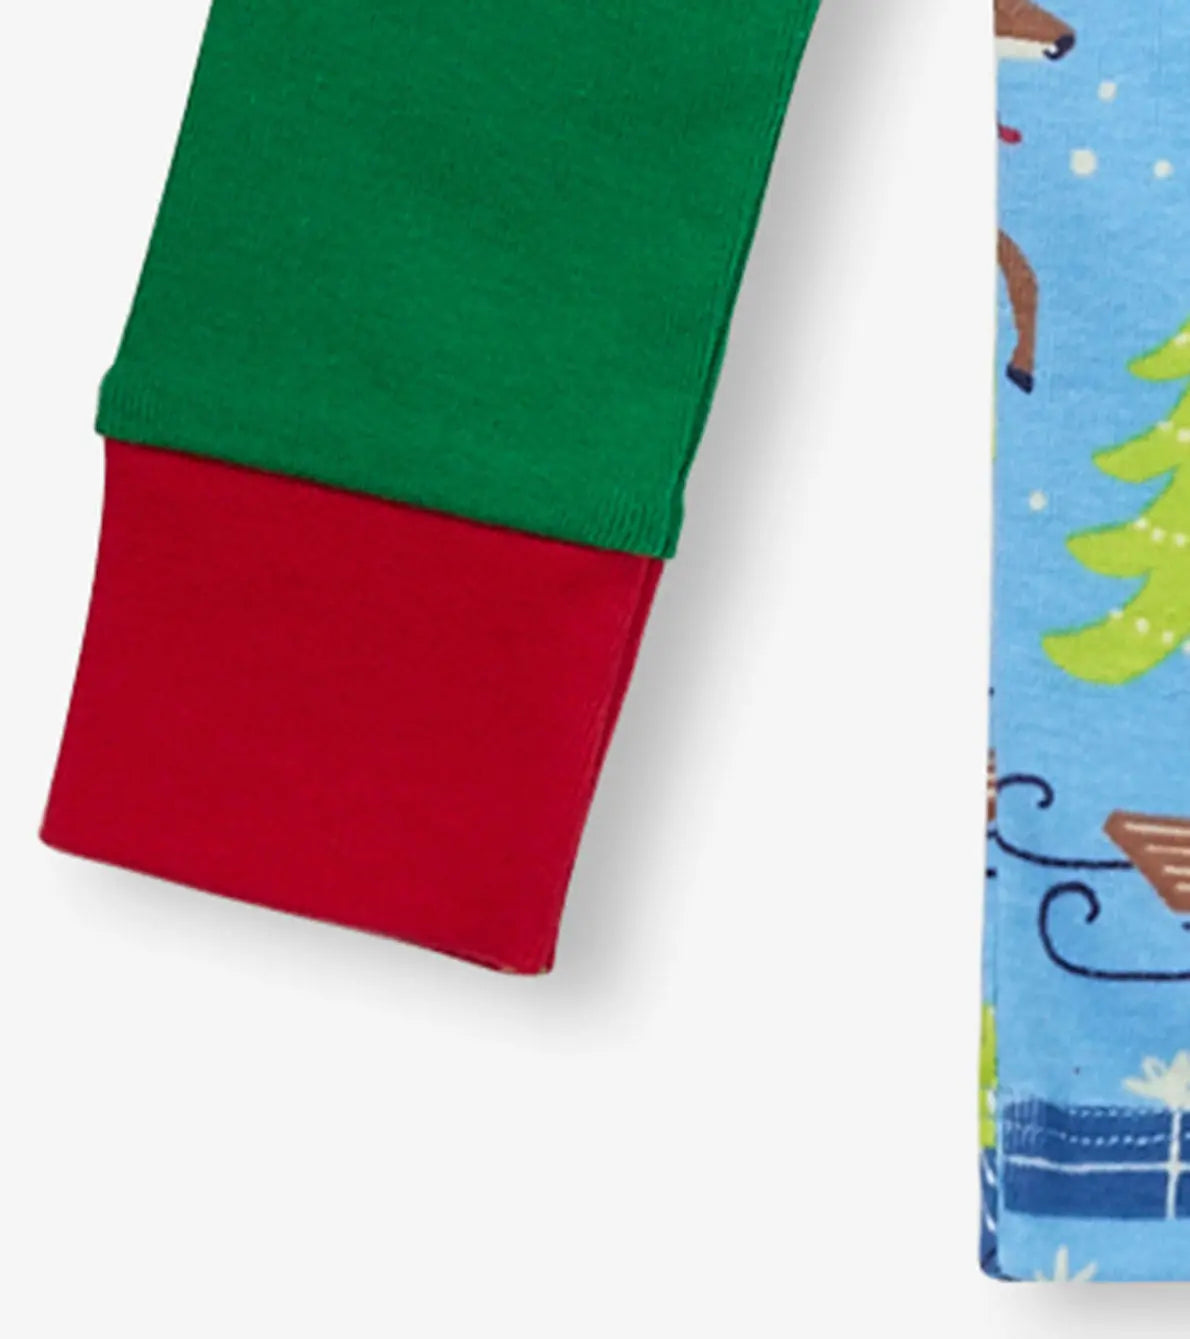 Blue Christmas Raglan Kids Organic Cotton Pajama Set | Hatley | Hatley | Jenni Kidz